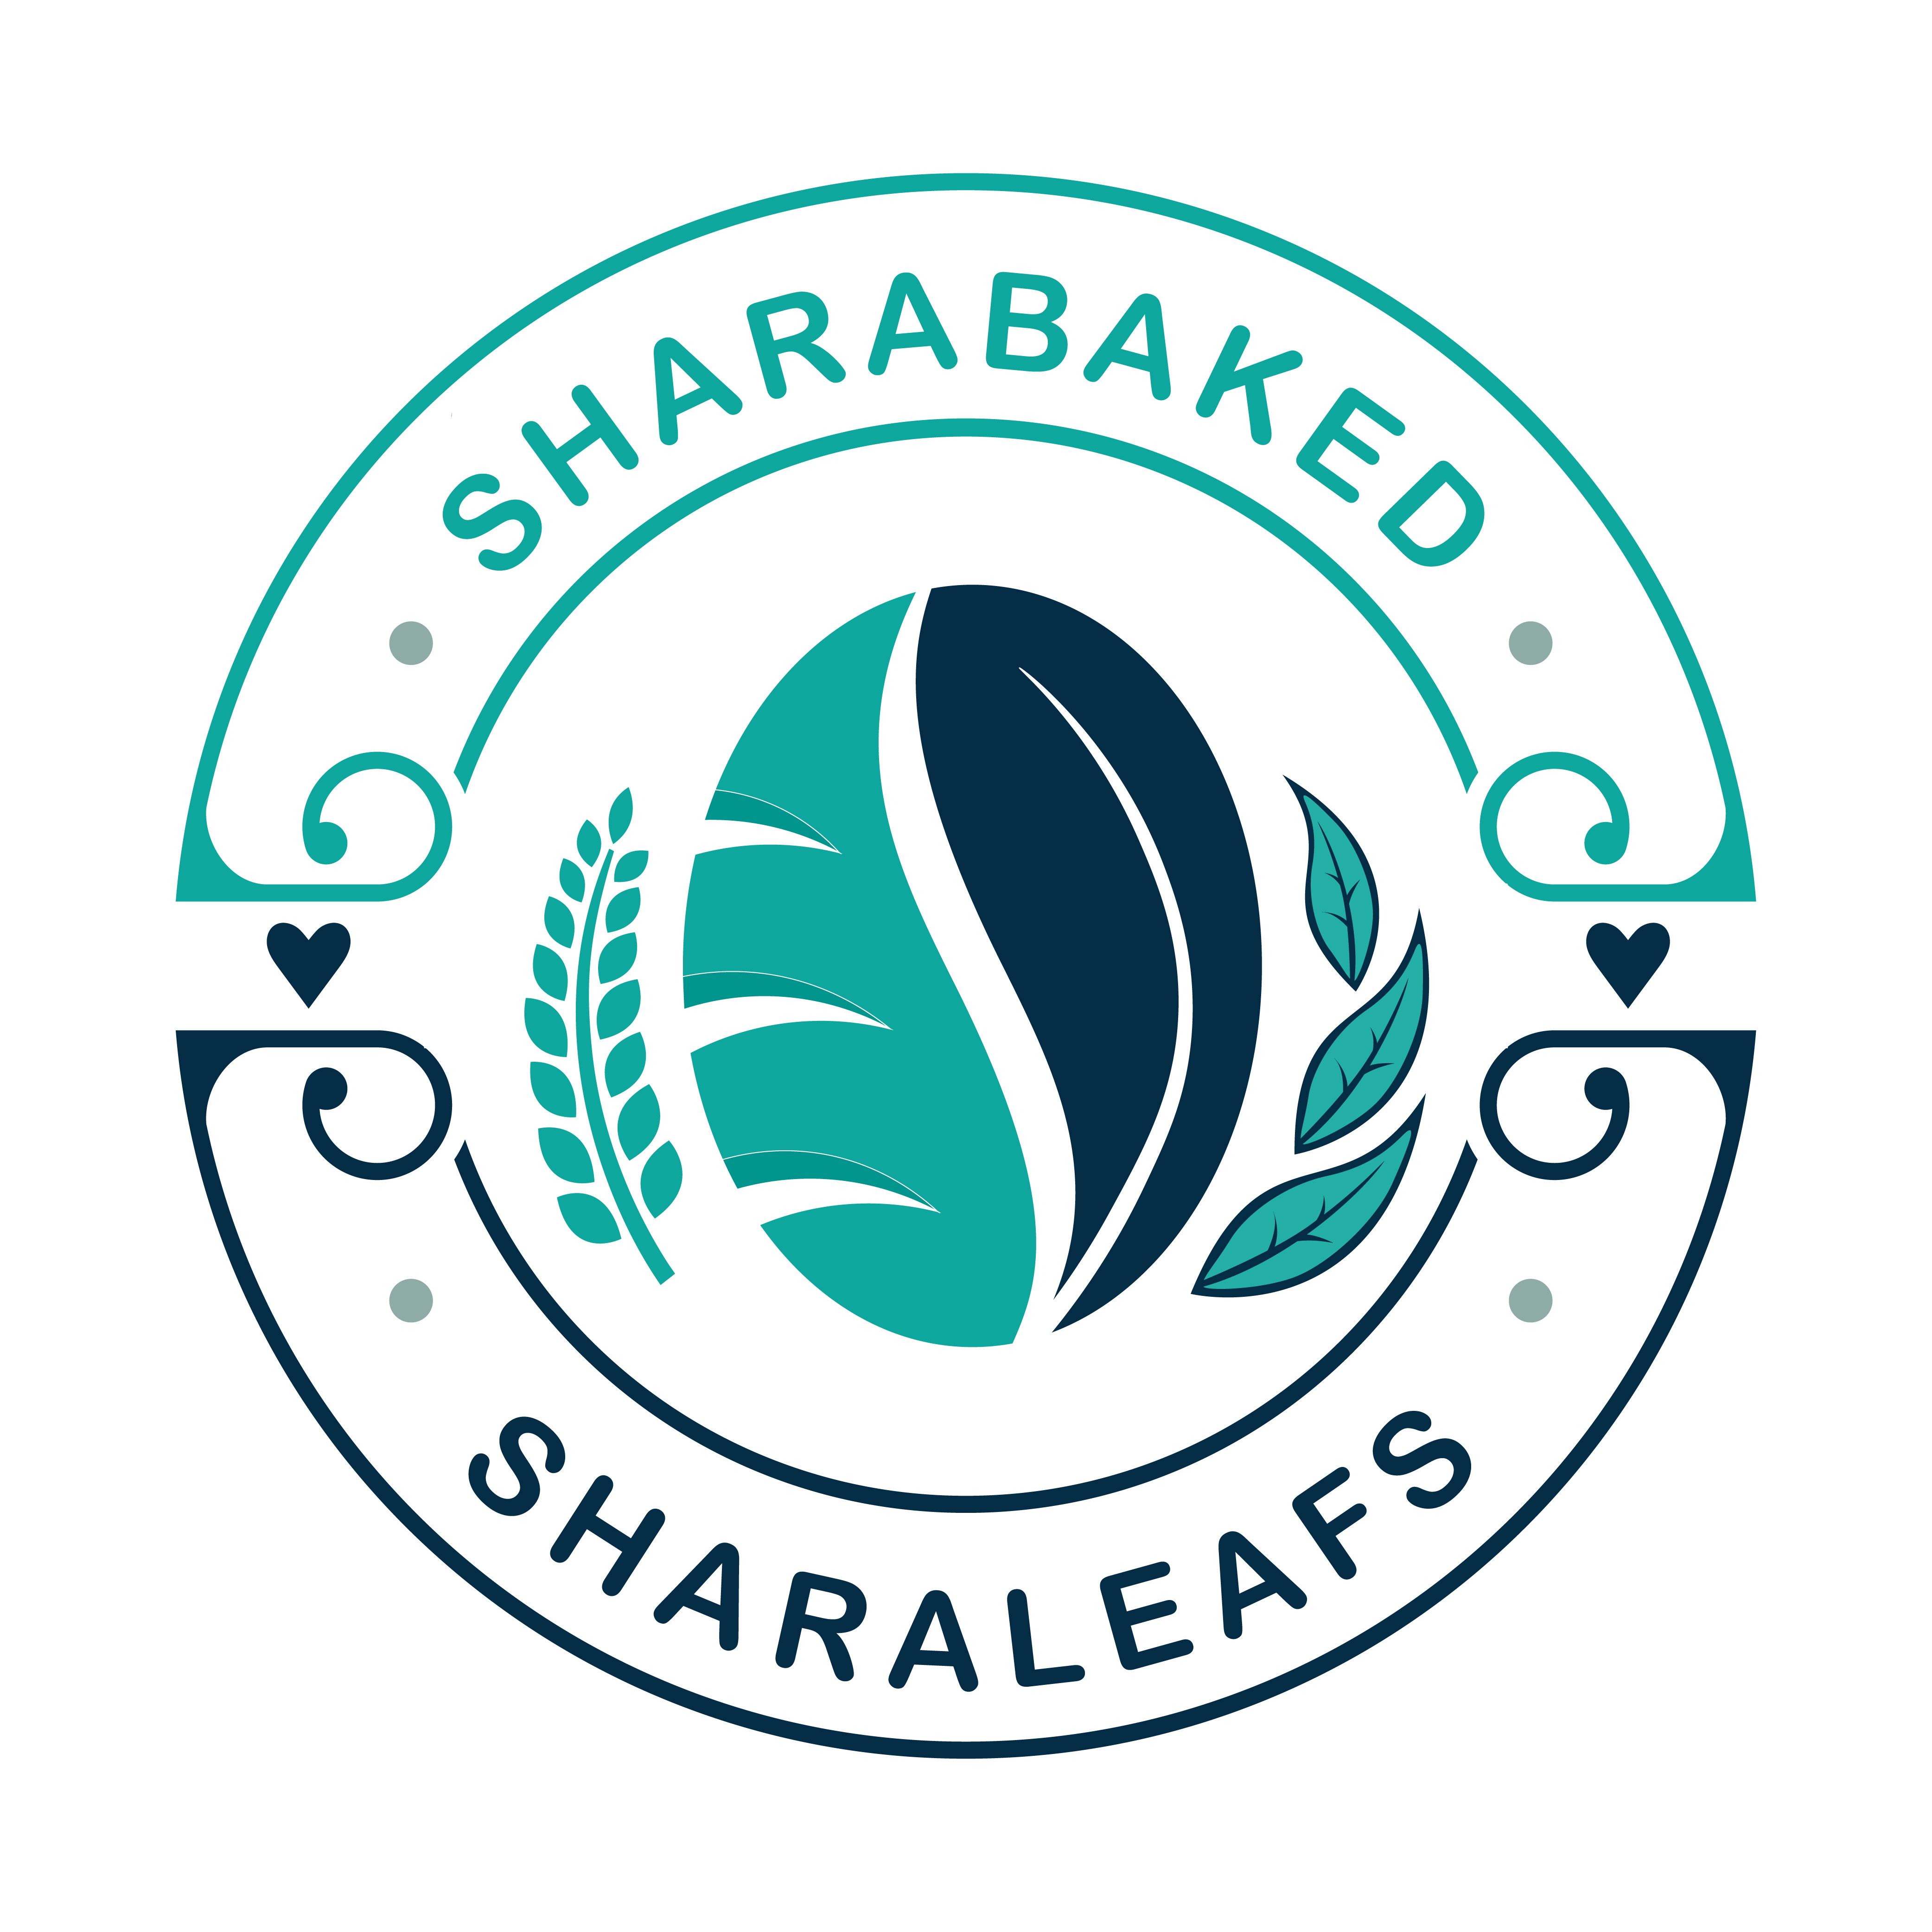 Sharabaked Sharaleafs-23.png